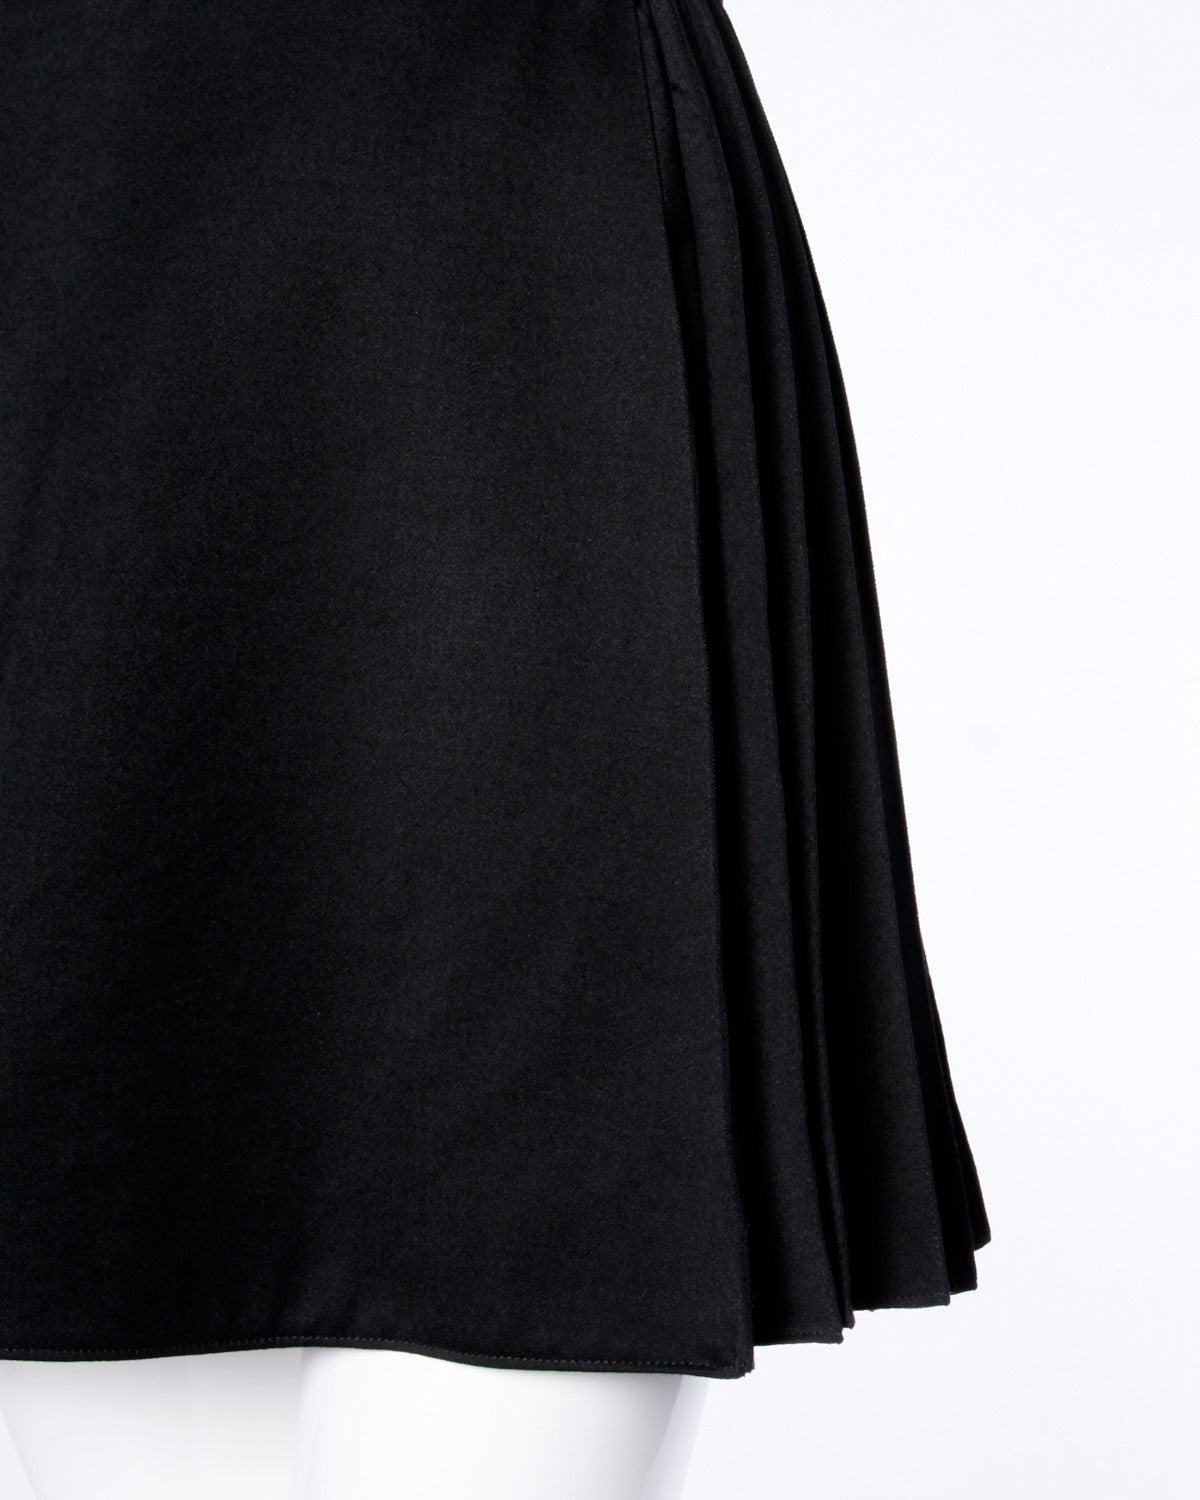 Women's Claude Montana Vintage Black Avant-Garde Accordion Pleated Panels Skirt